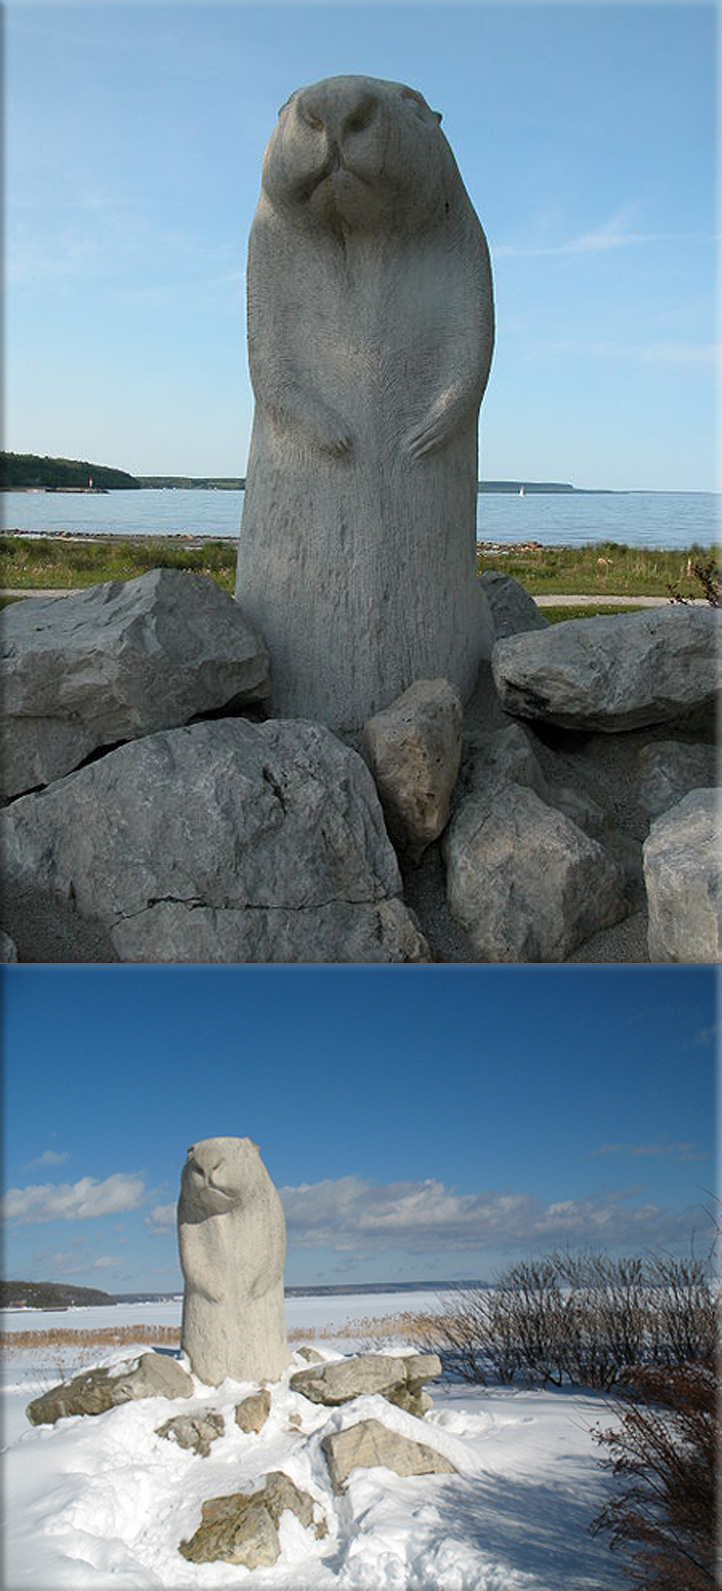 Statue of groundhog Wiarton Willie in Wiarton, Ontario